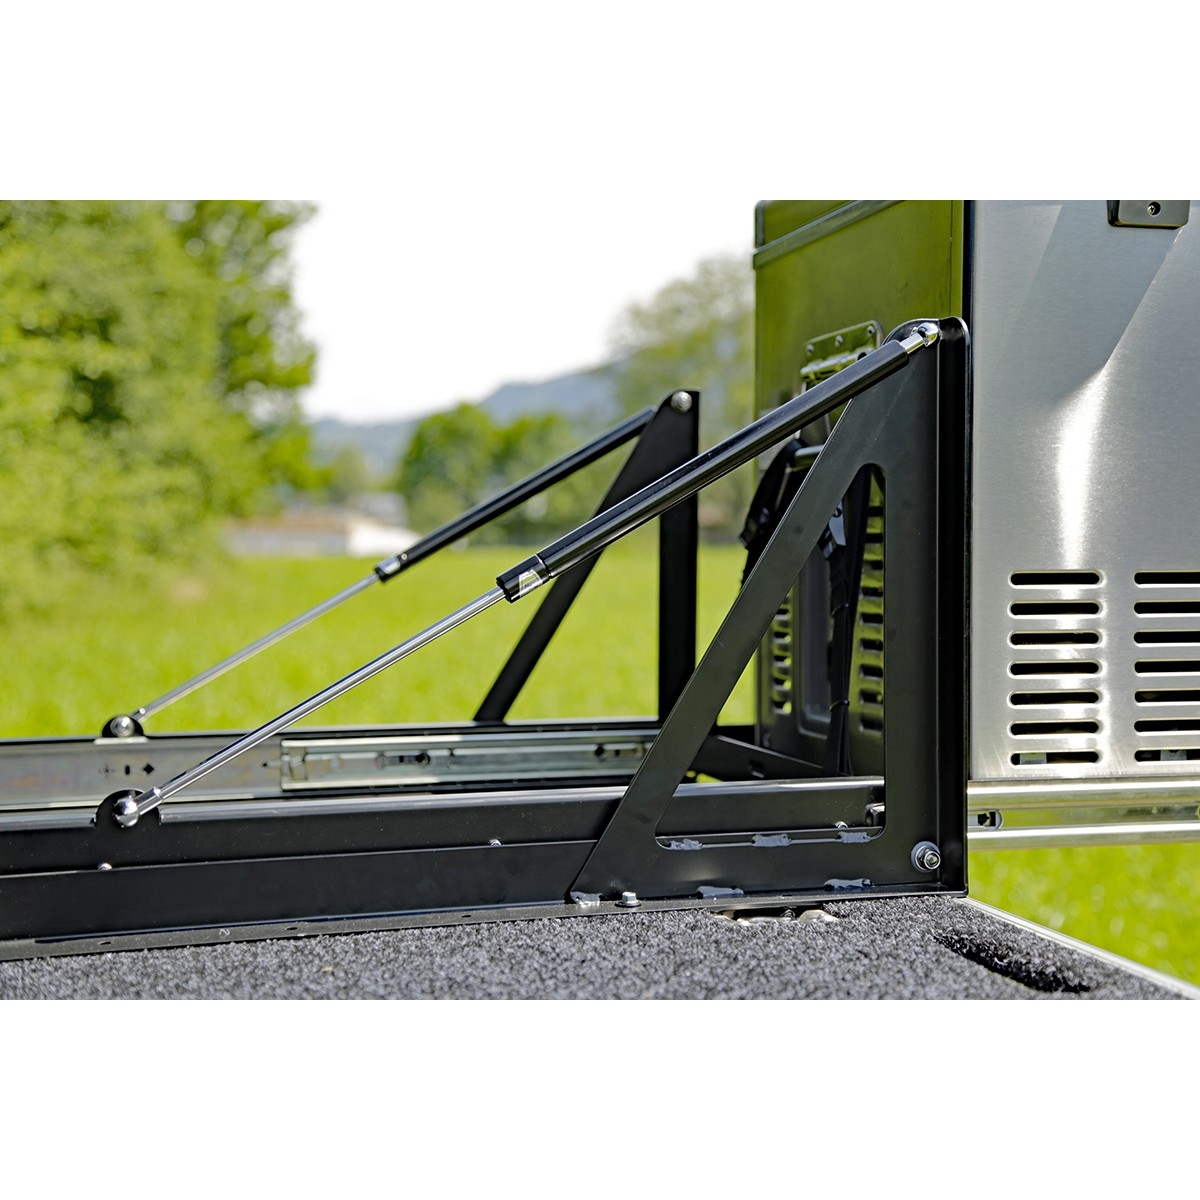  Ihr zuverlässiger Partner in Offroad-Tuning! - Kühlbox Auszug  kippbar 750x430mm Aluminium PickUp Vollauszug Cargo Slide Kühlschrank Box  Ladeboden